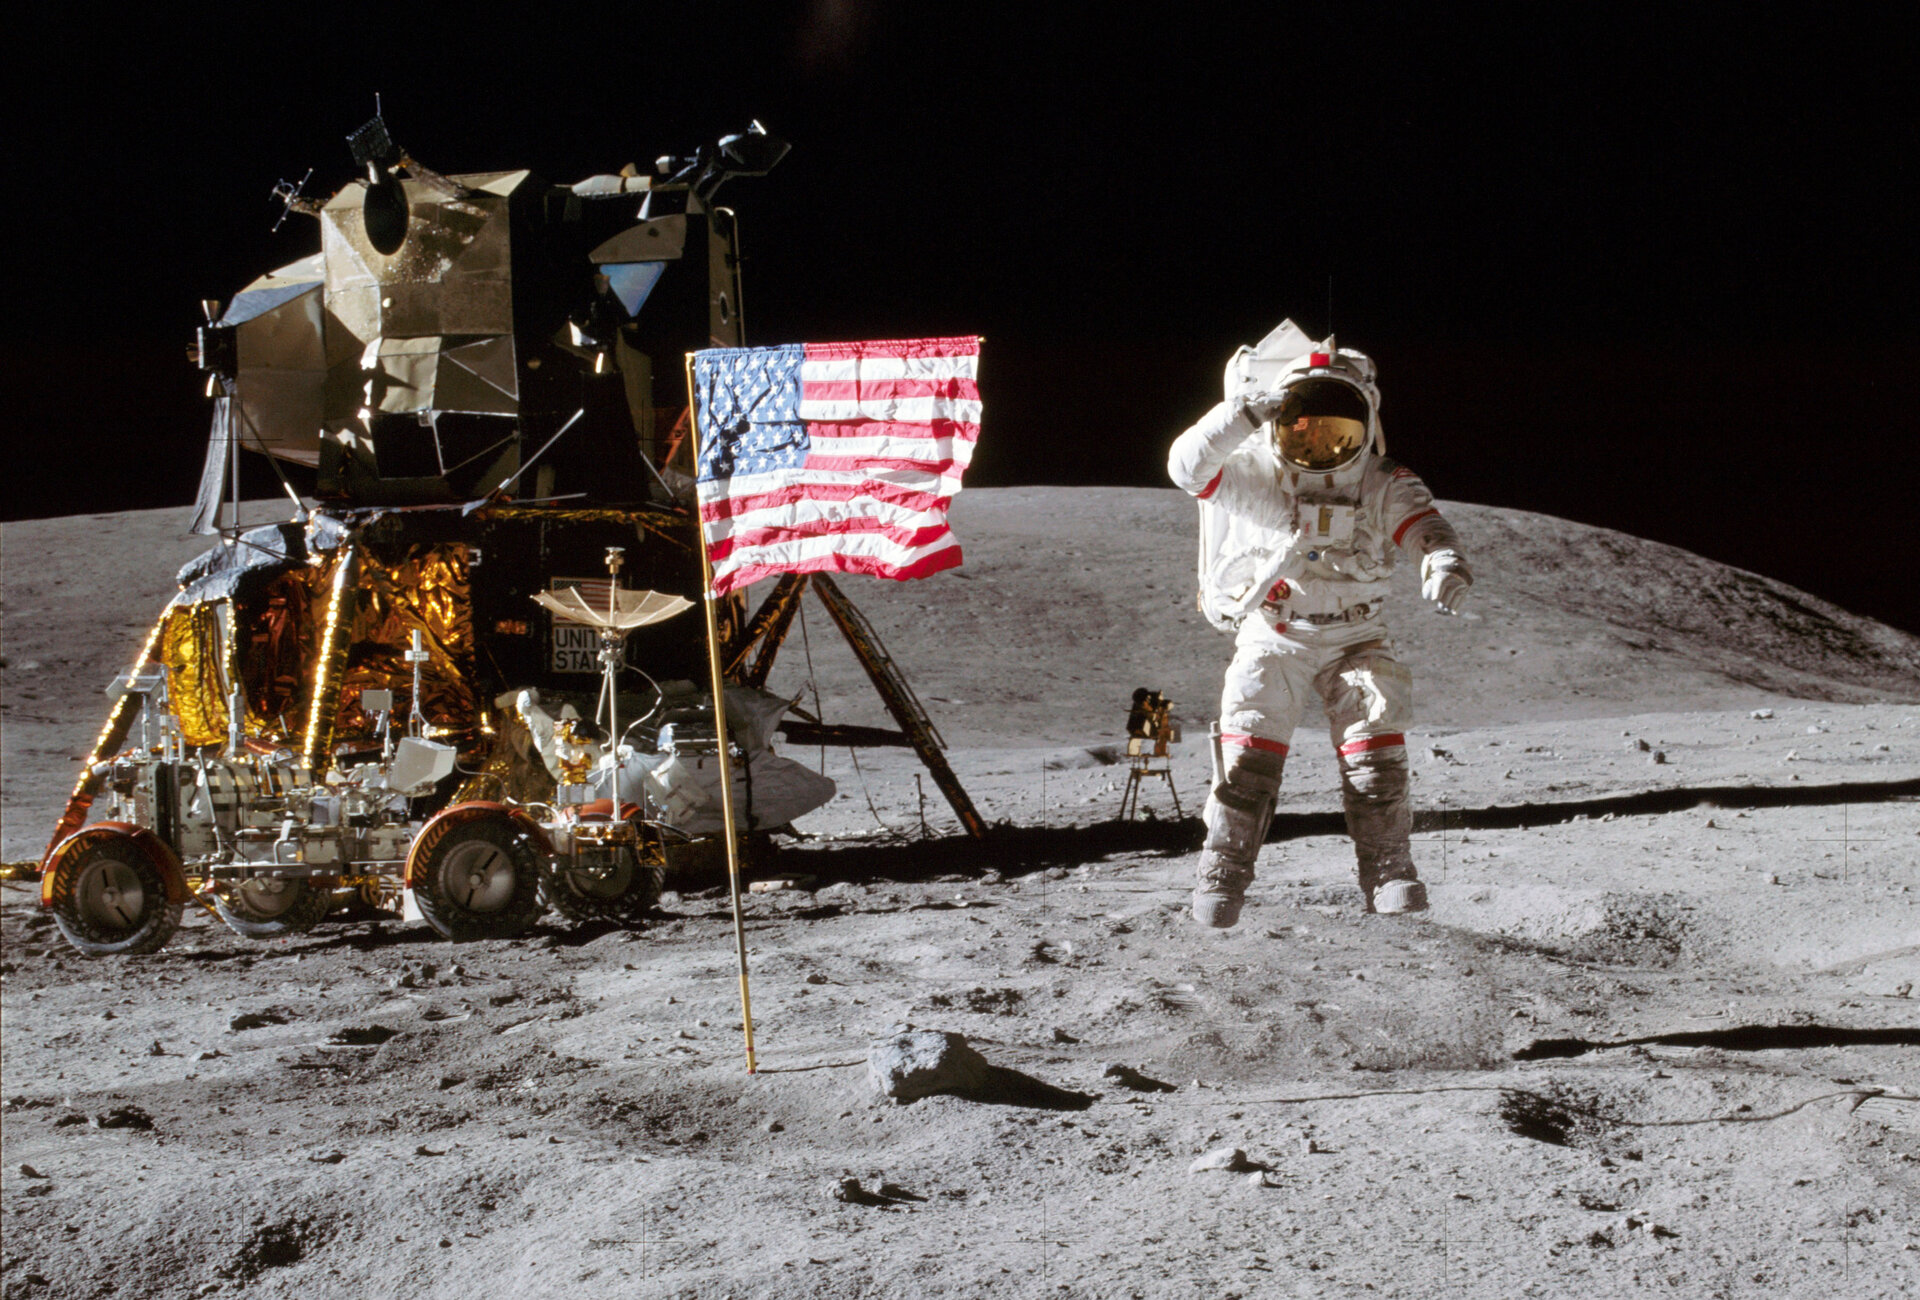 Apollo 16 commander John Young on the moon 